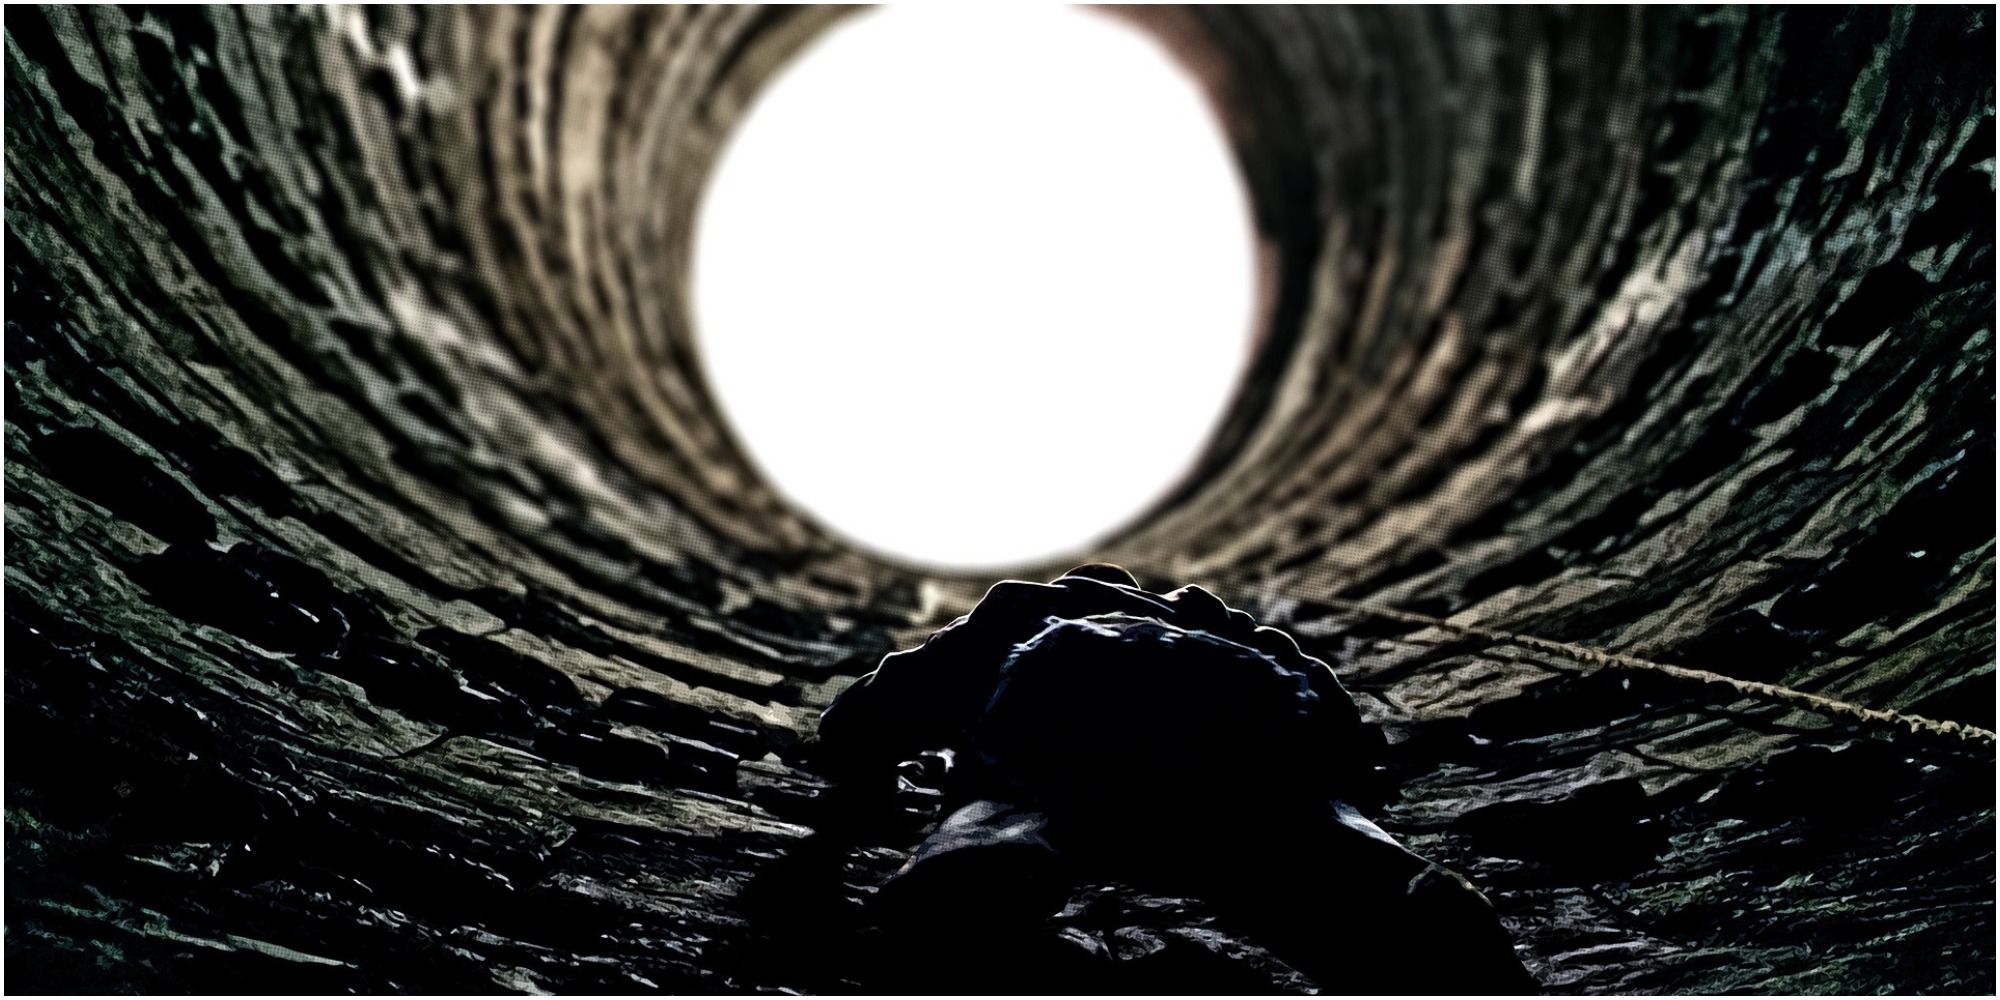 Christian Bale as Bruce Wayne Climbing Out of a hole